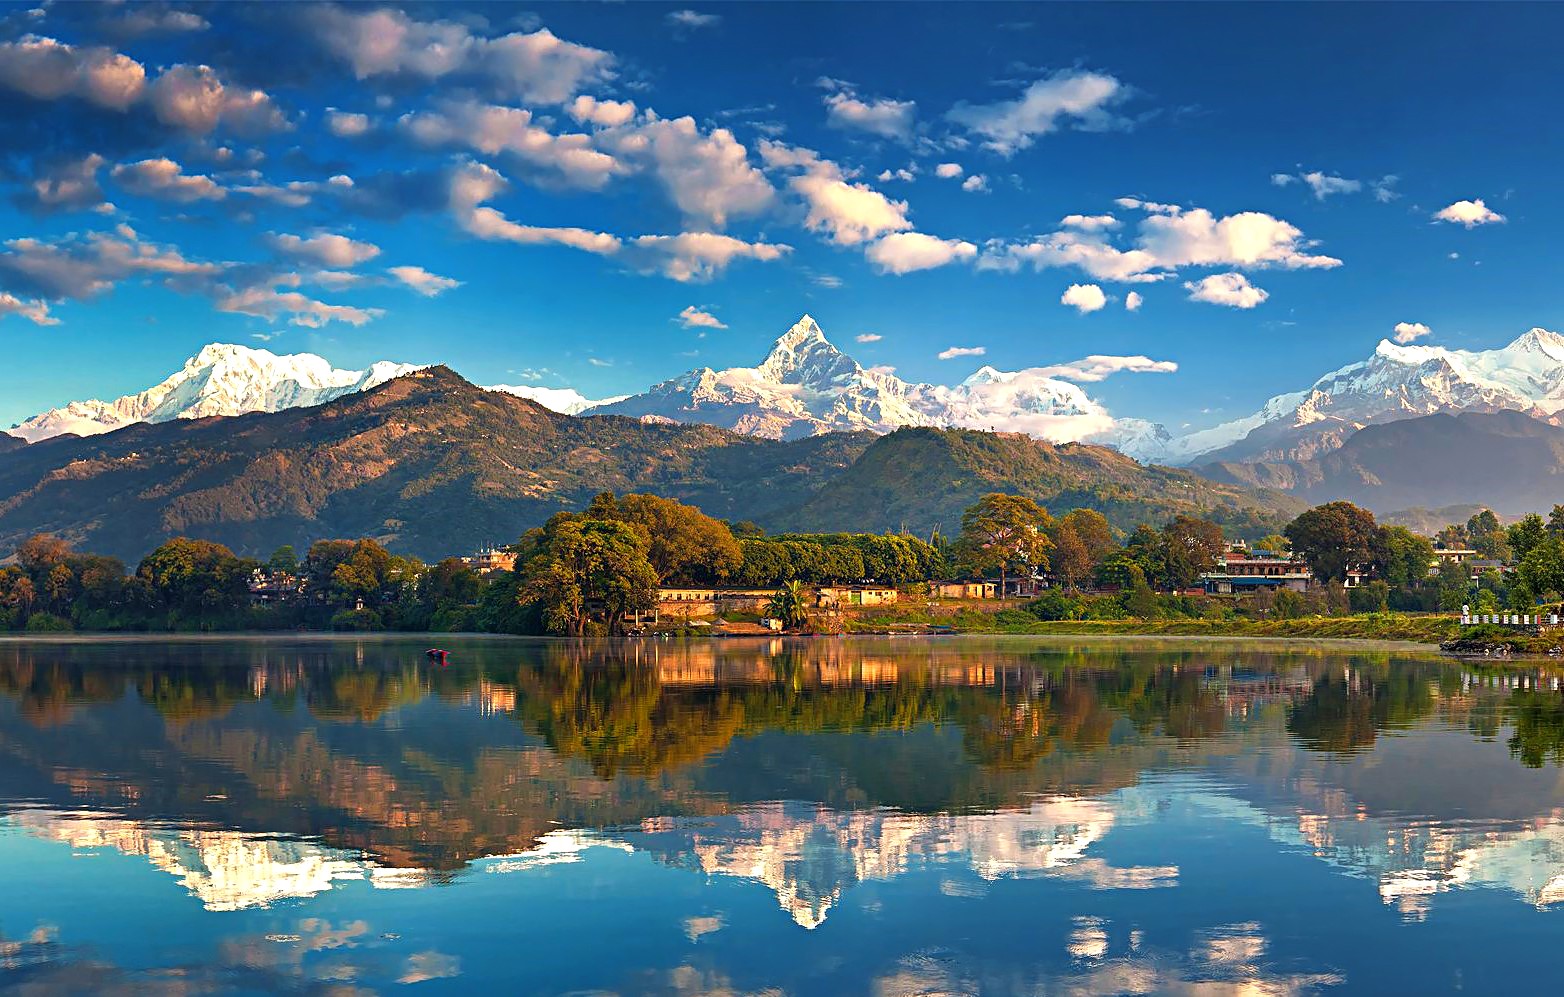 Pokhara - Scenic View